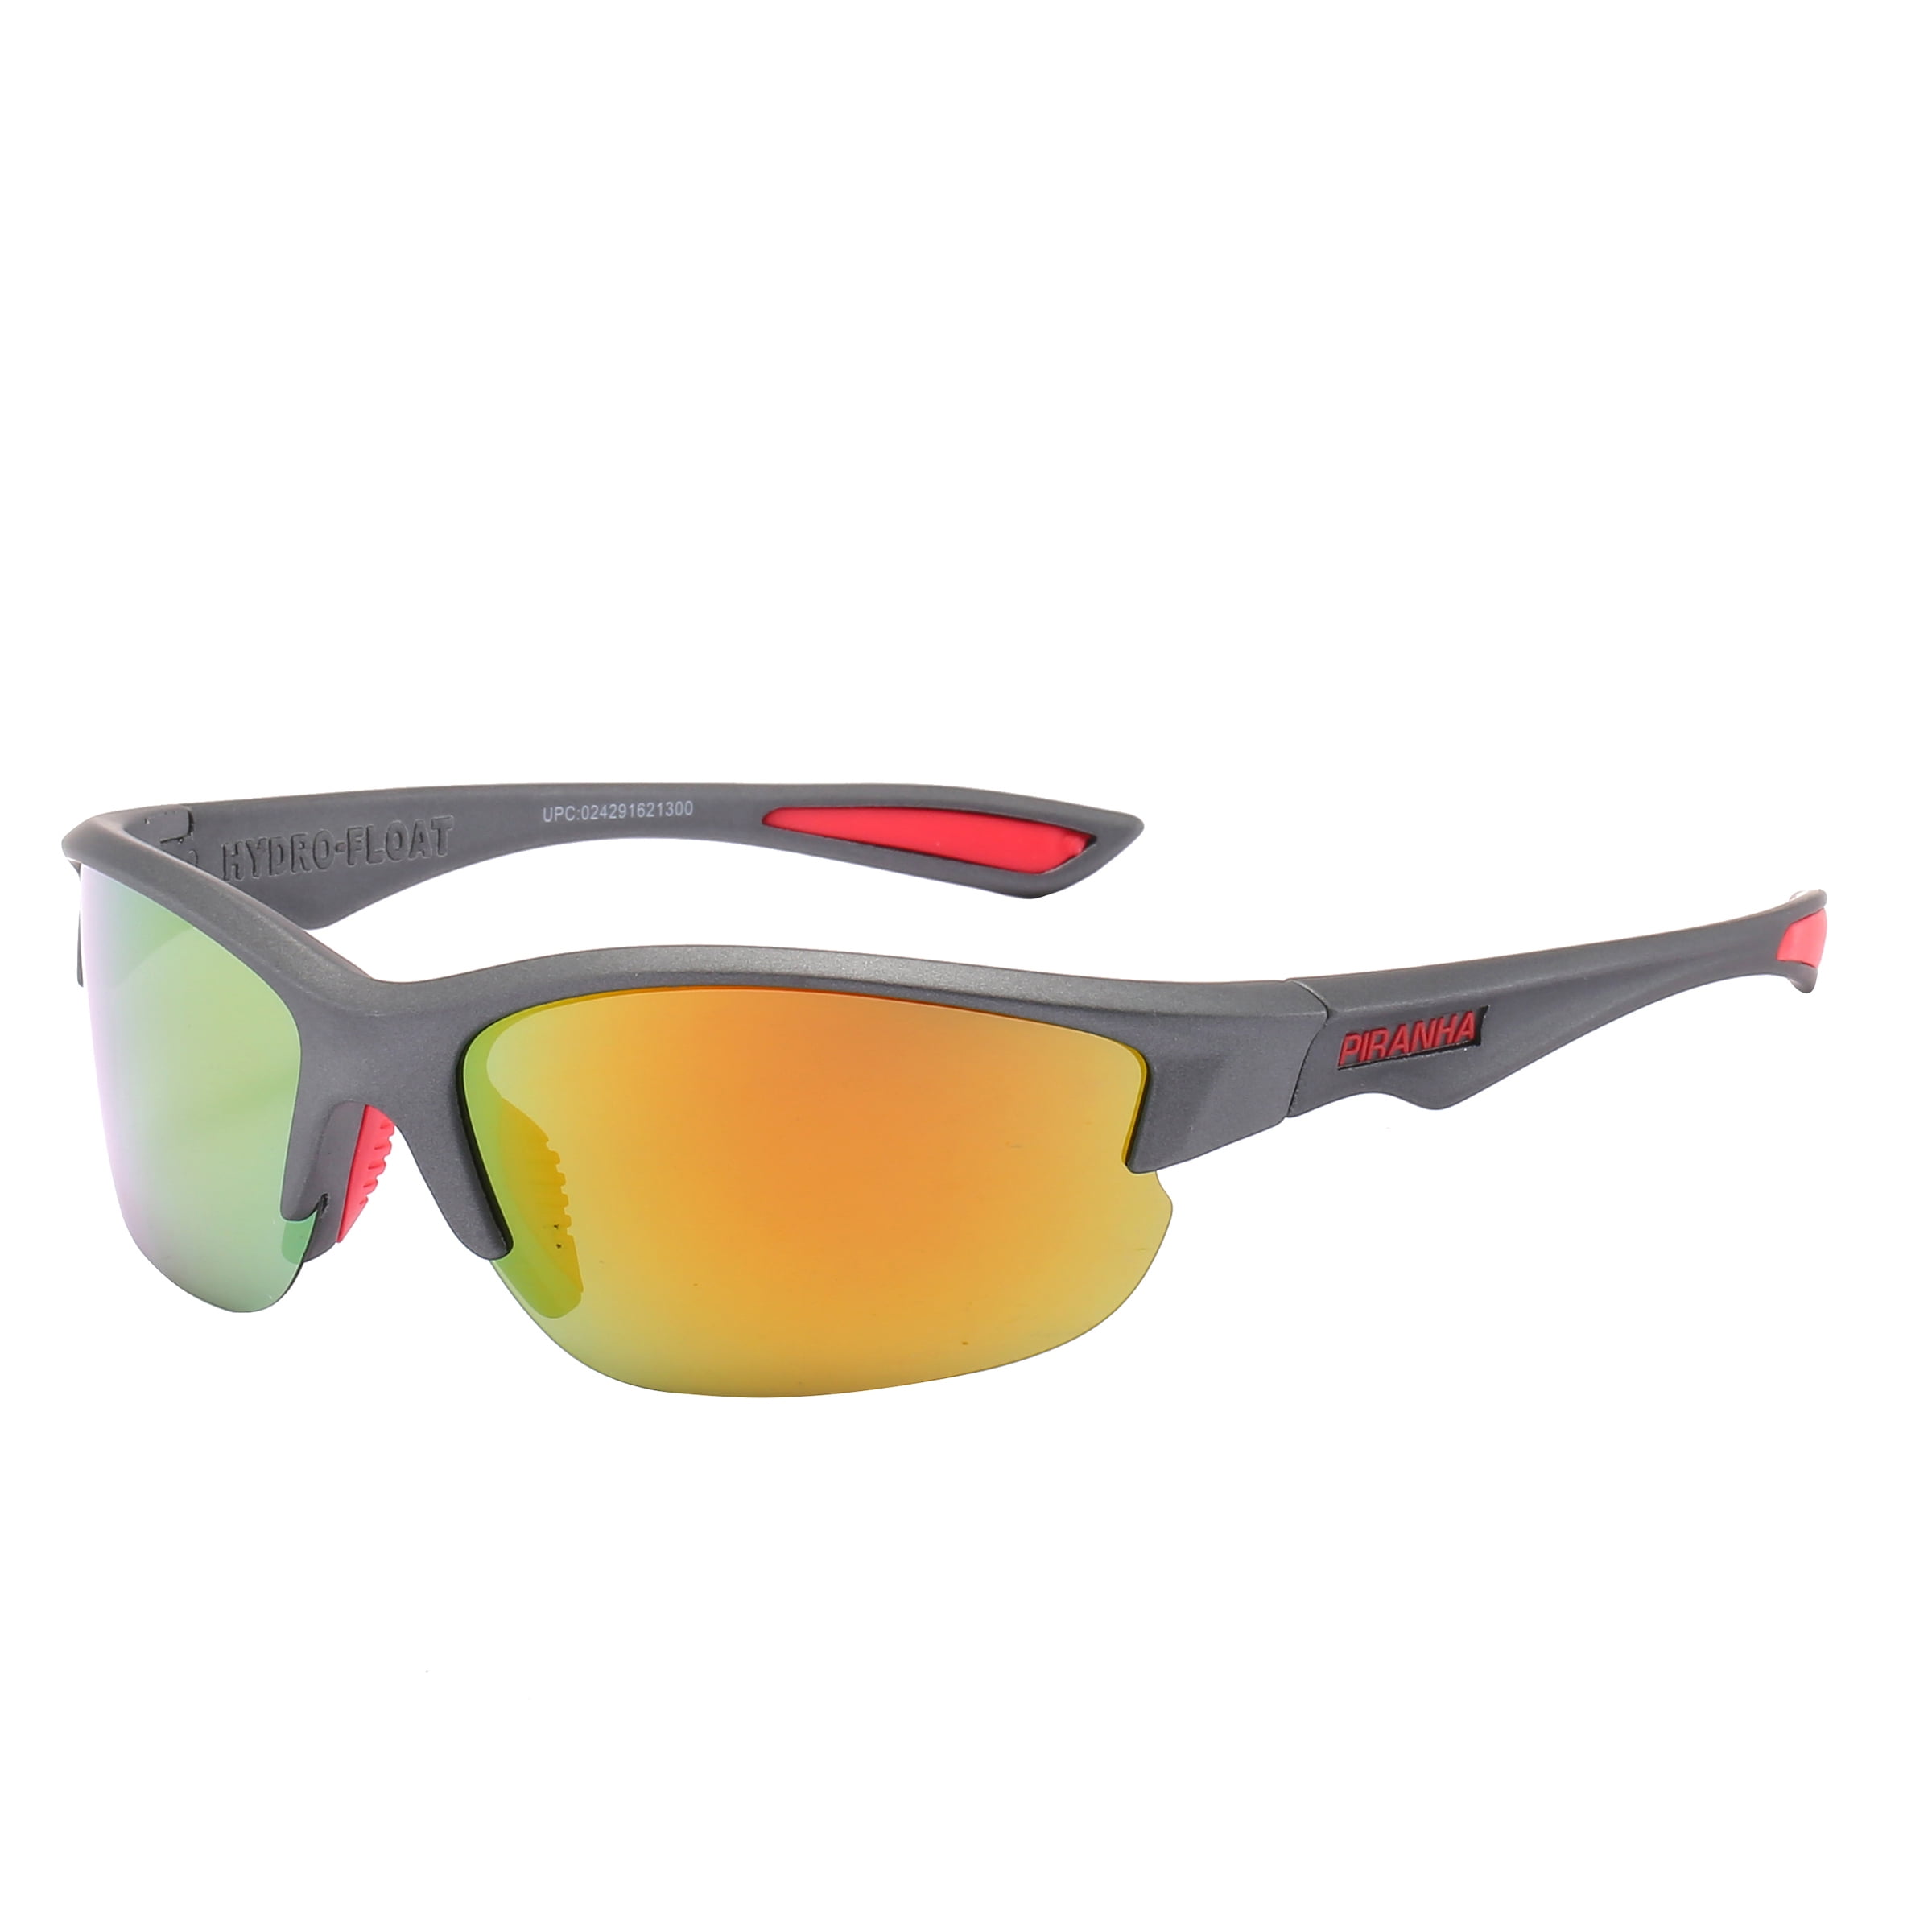 Piranha Eyewear Spirit Hydrofloat unisex Sport Sunglasses with Orange Mirror Lens, adult Unisex, Size: One size, Gray